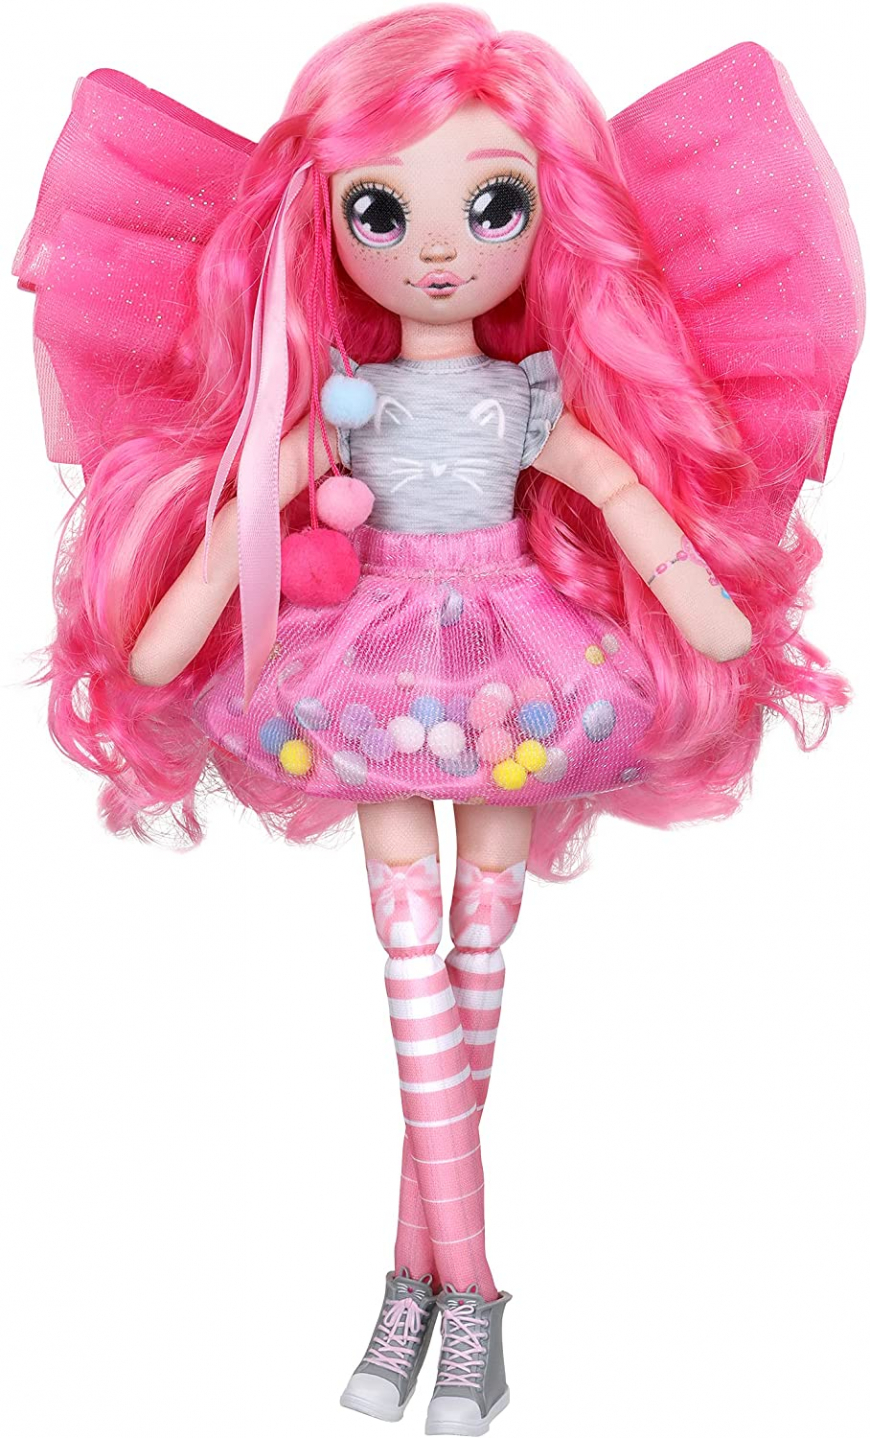 Dream Seekers Bella new version 2021 doll